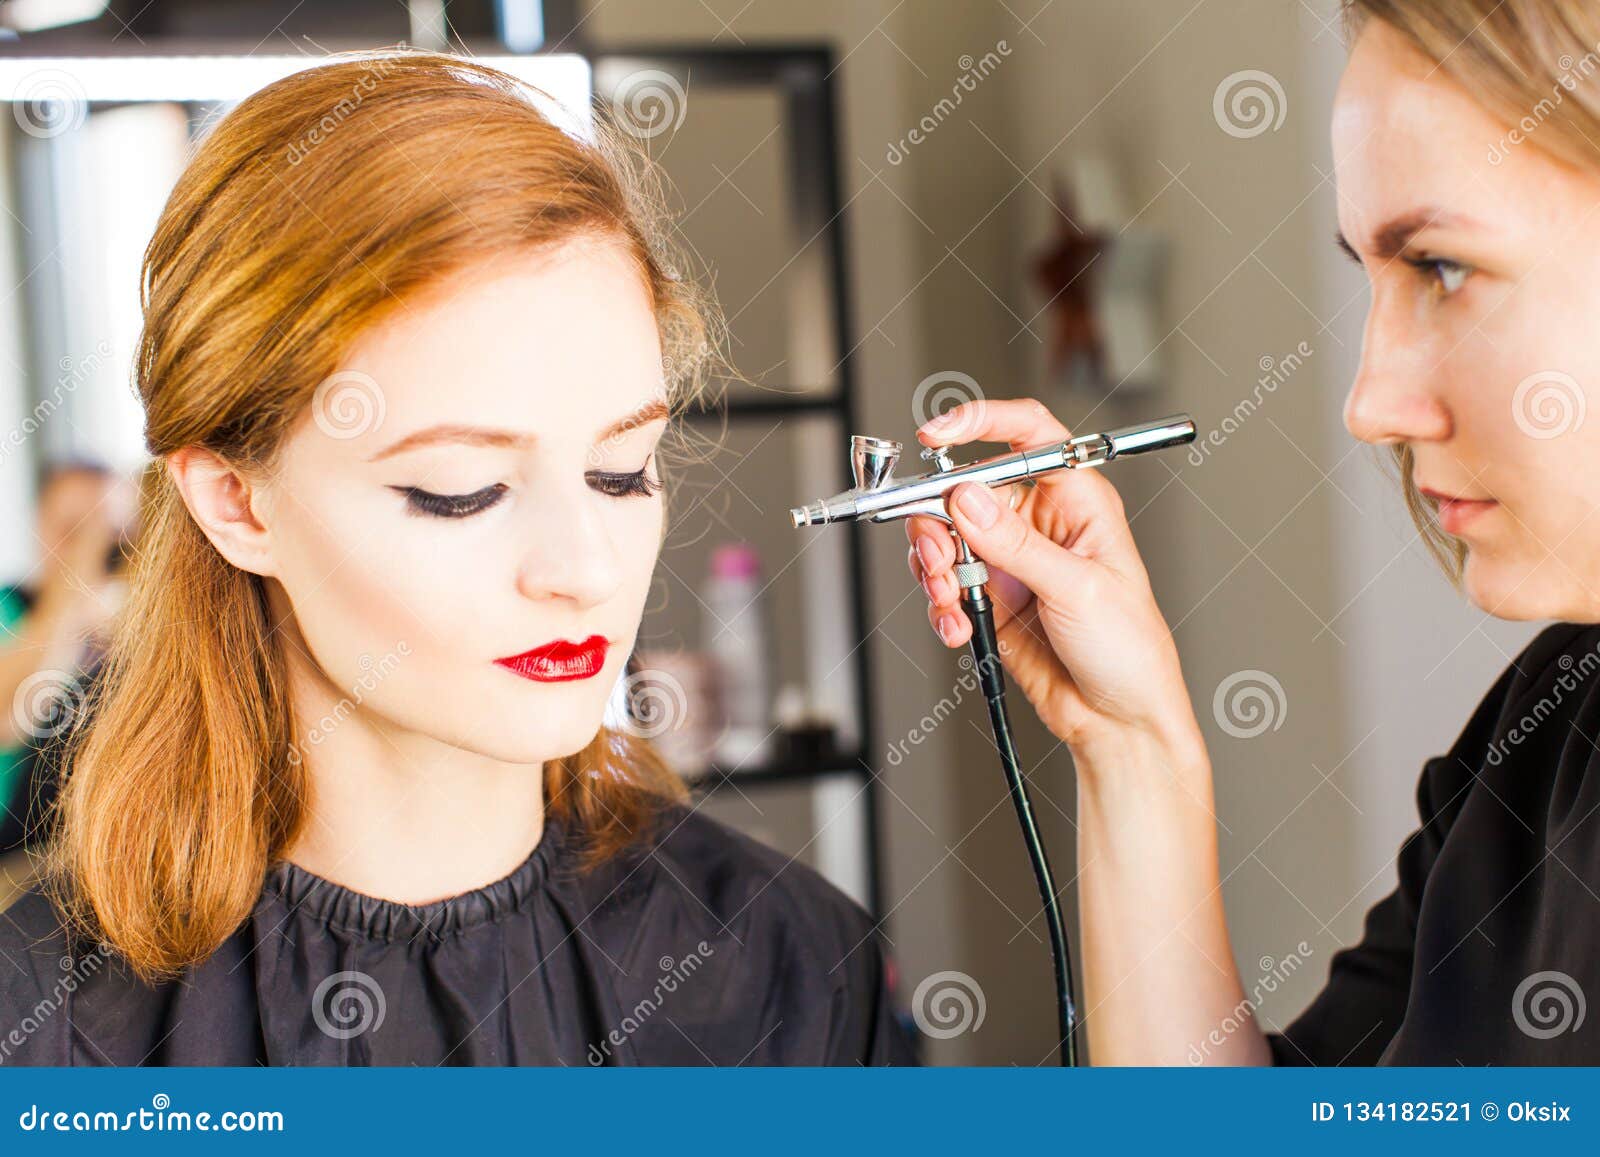 Side view of a make-up artist using aerograph making an airbrush